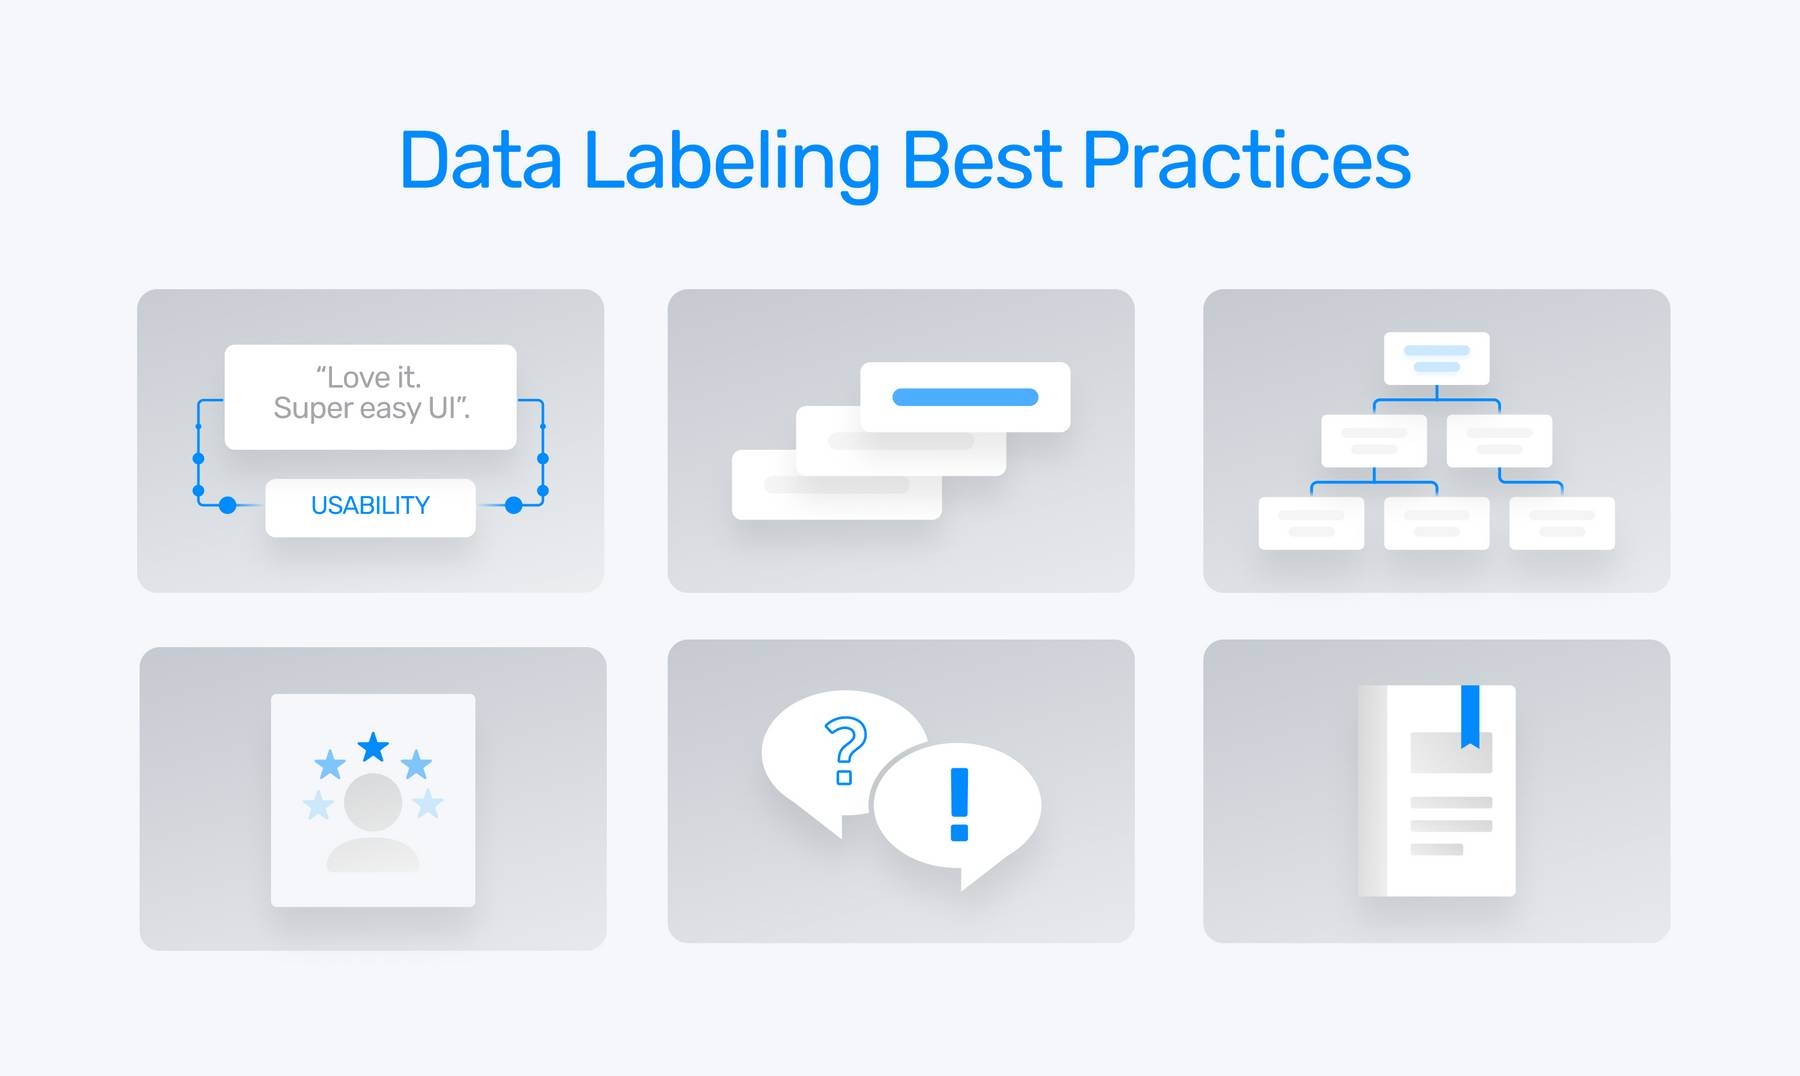 Data labeling best practices